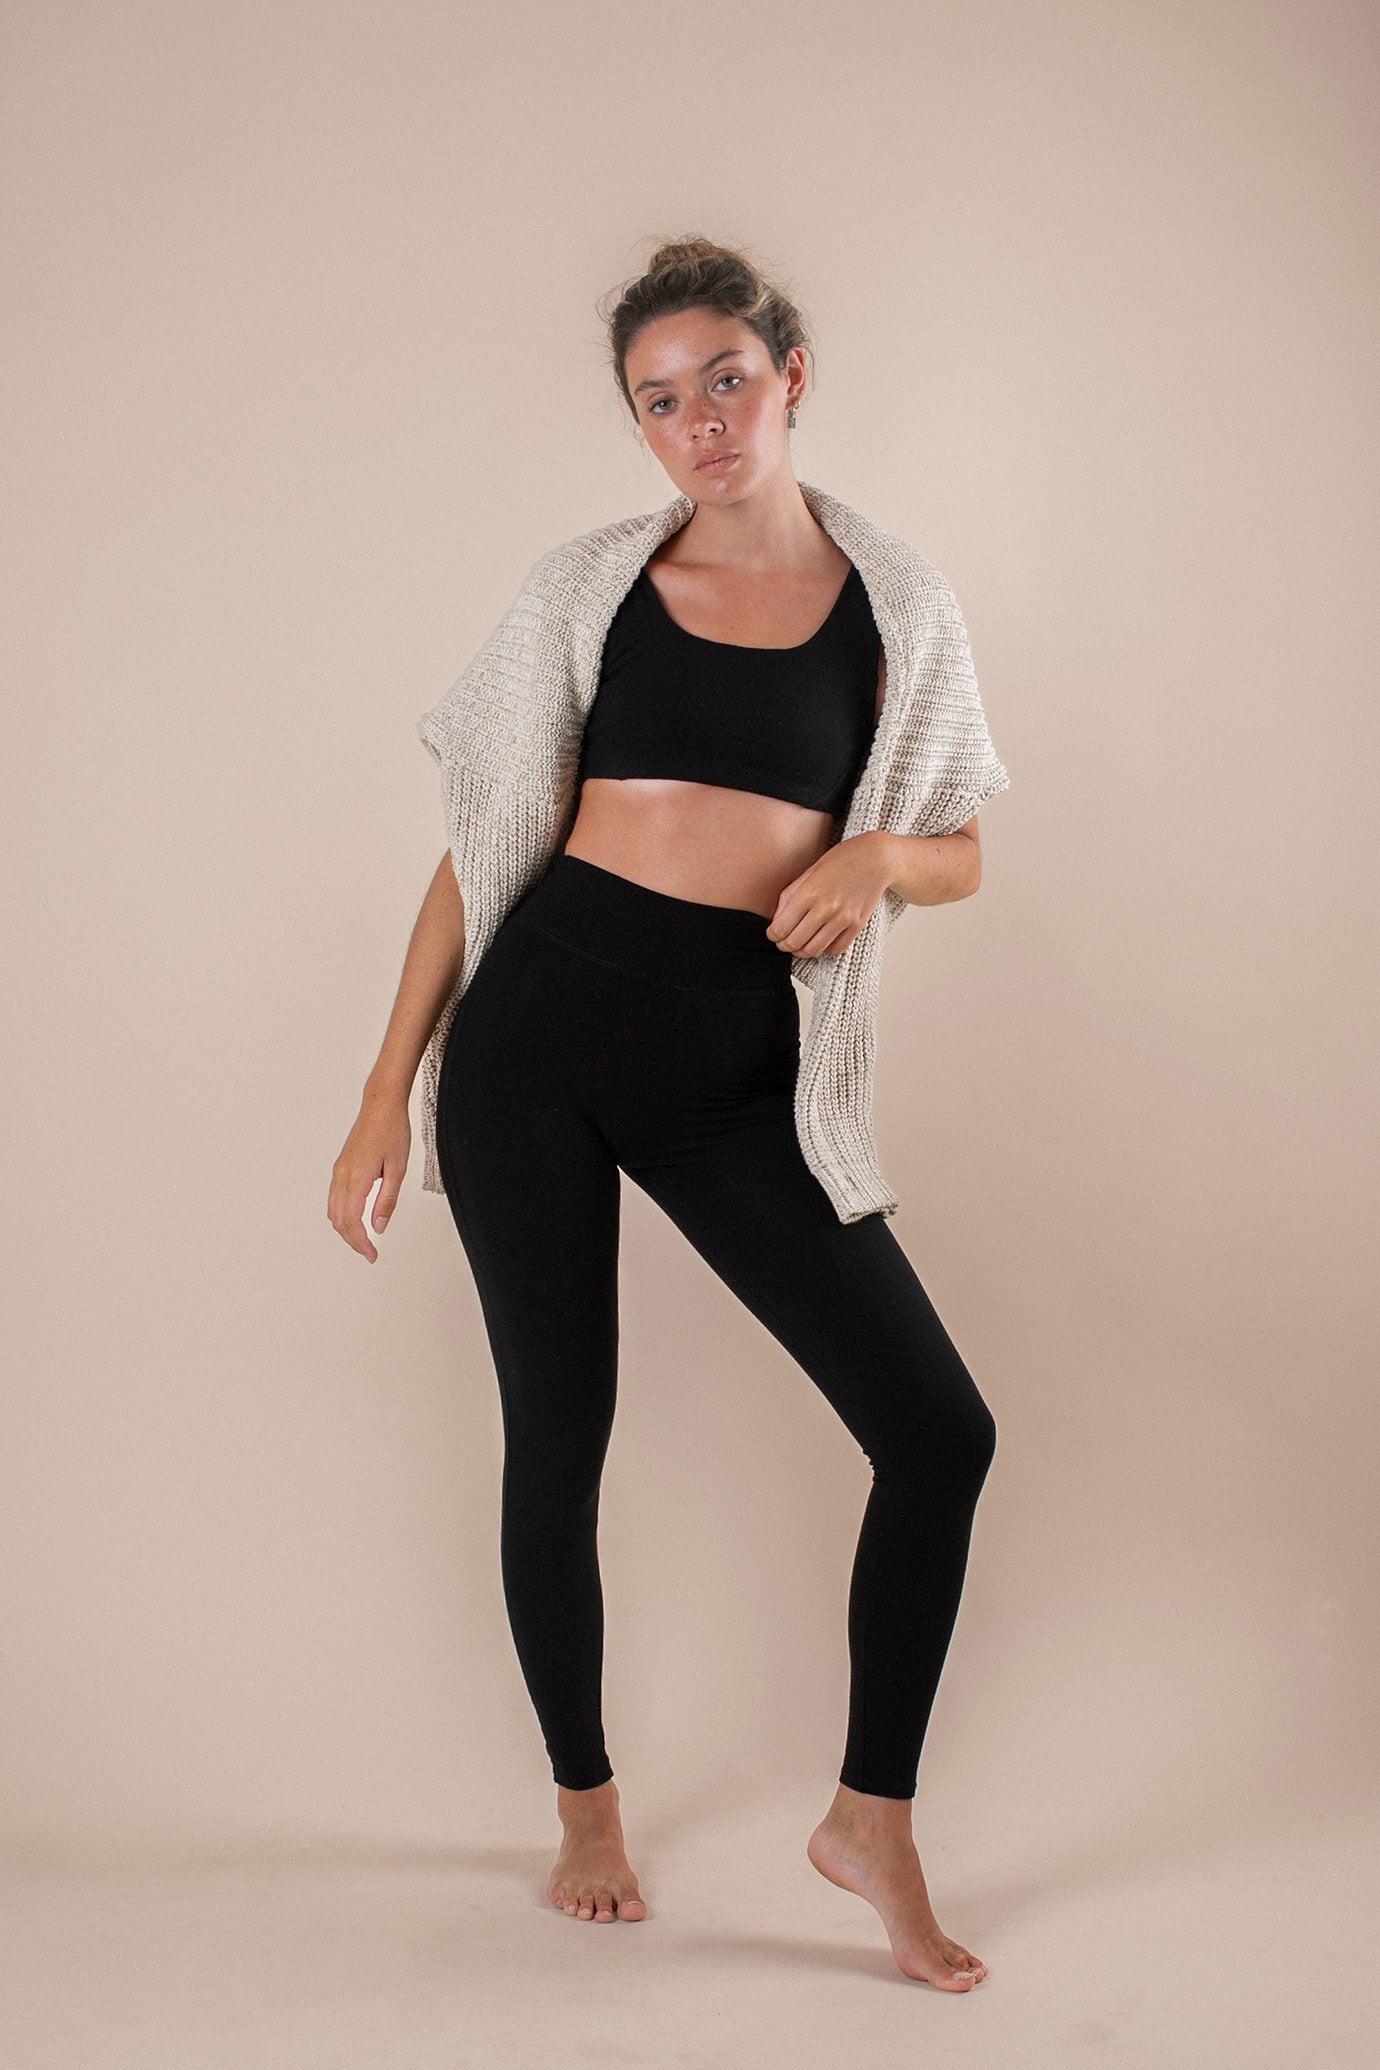 Moon Phases Black Leggings - XXL  Printed yoga pants, Affordable leggings,  Activewear sportswear